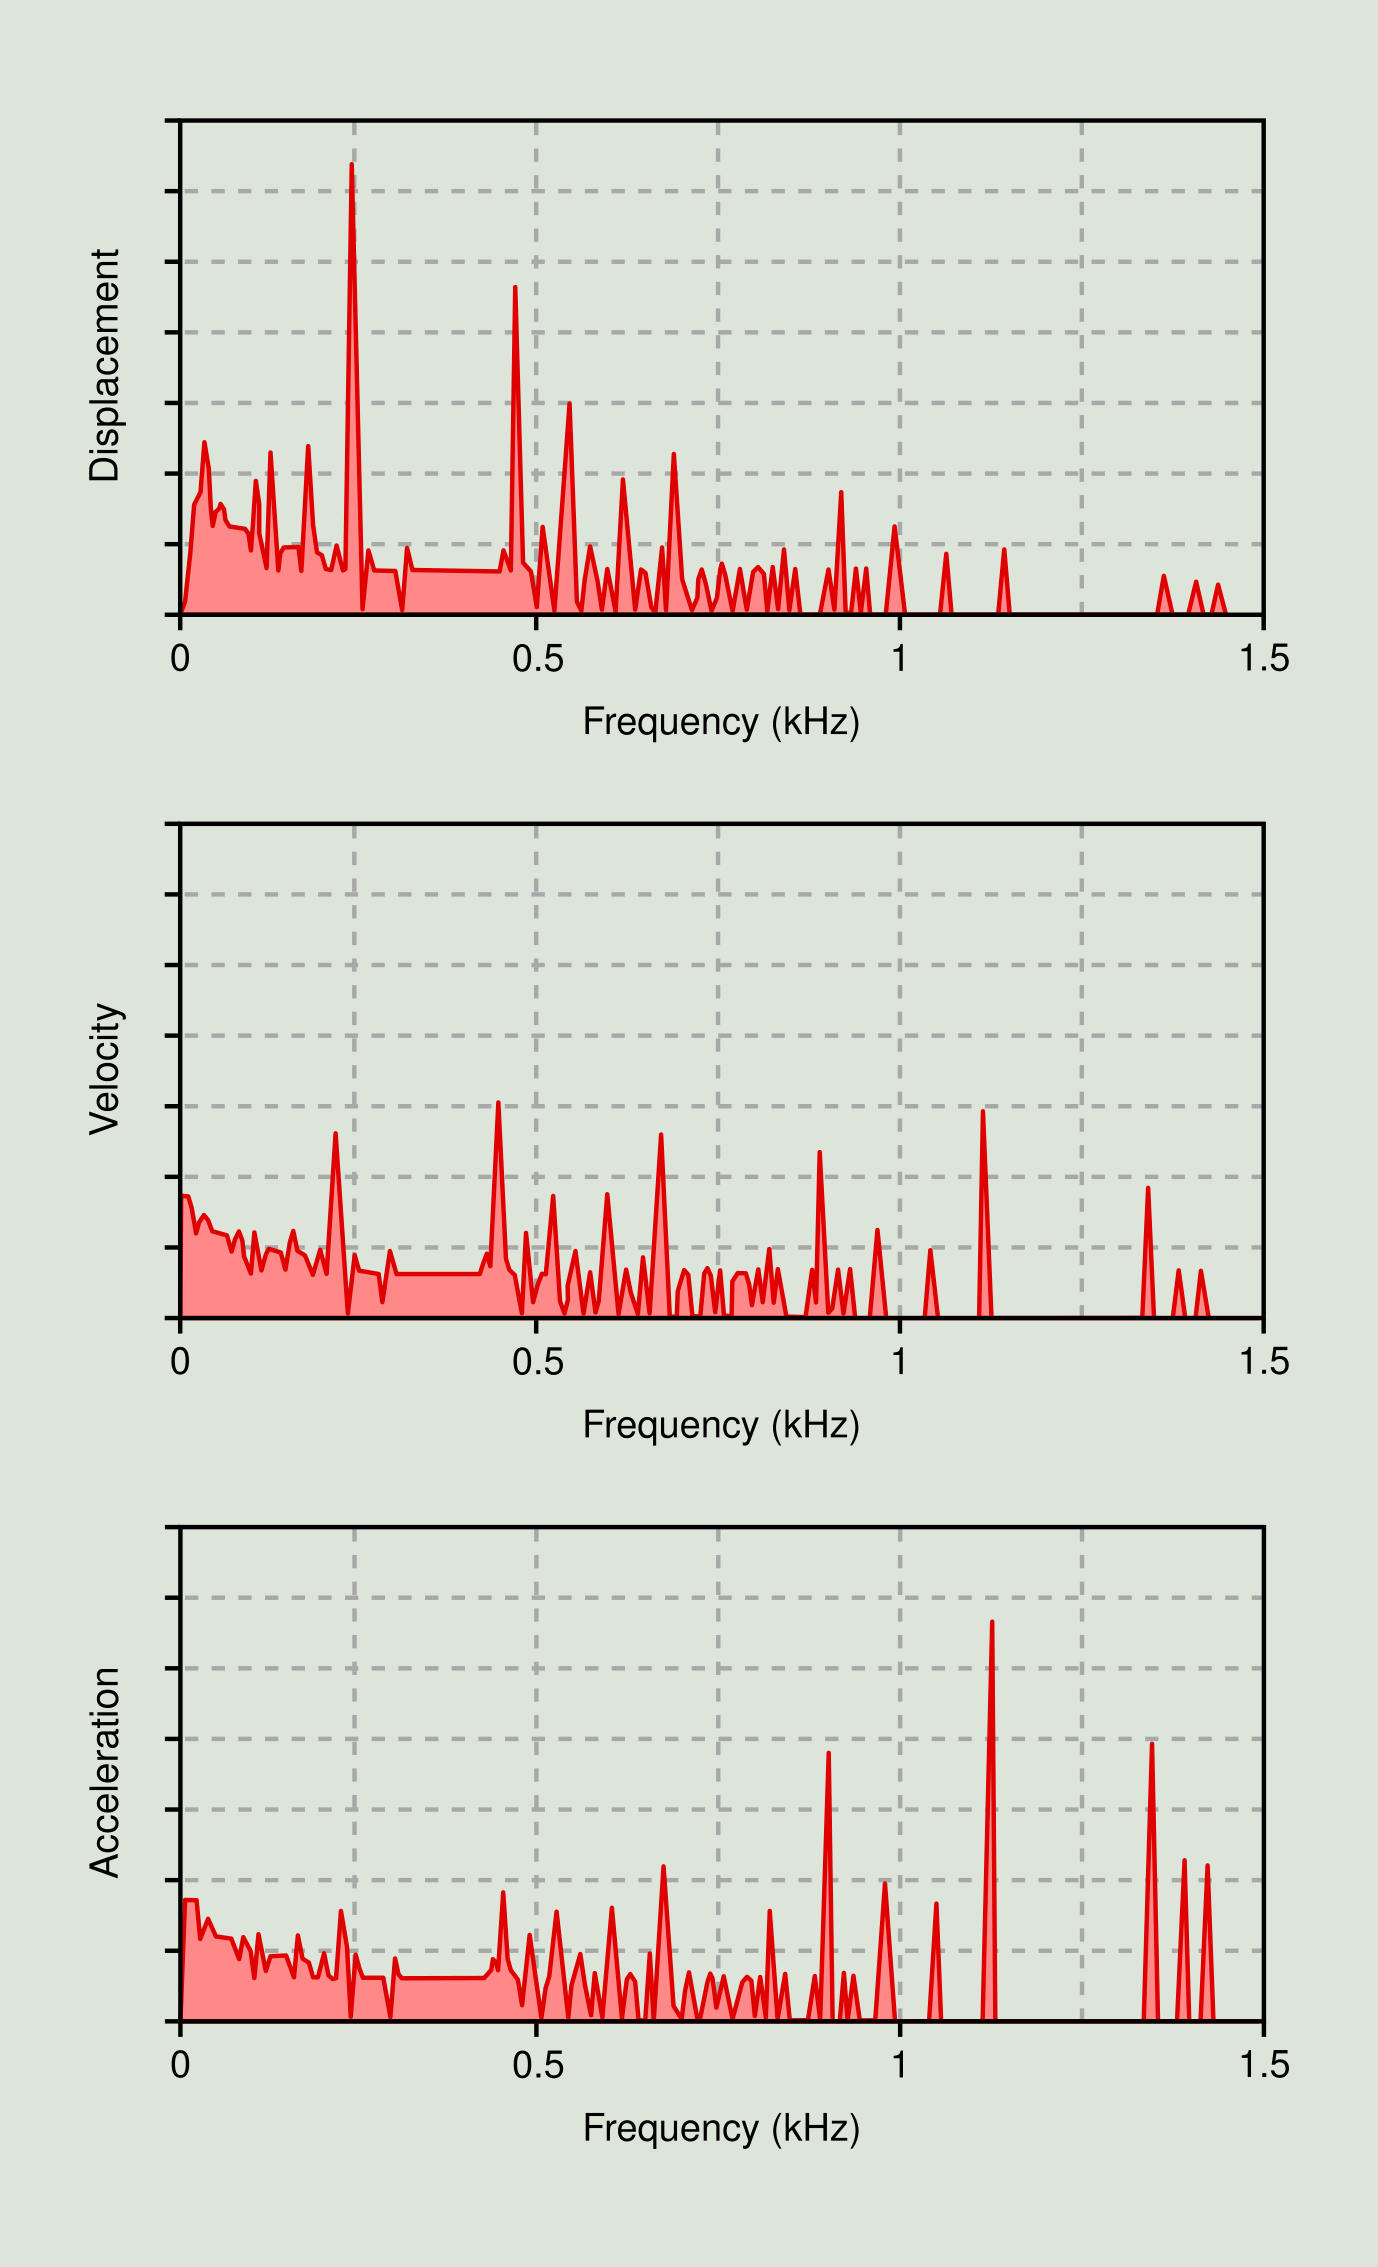 Figure 2.13: Spectral behavior for each vibration physical quantity